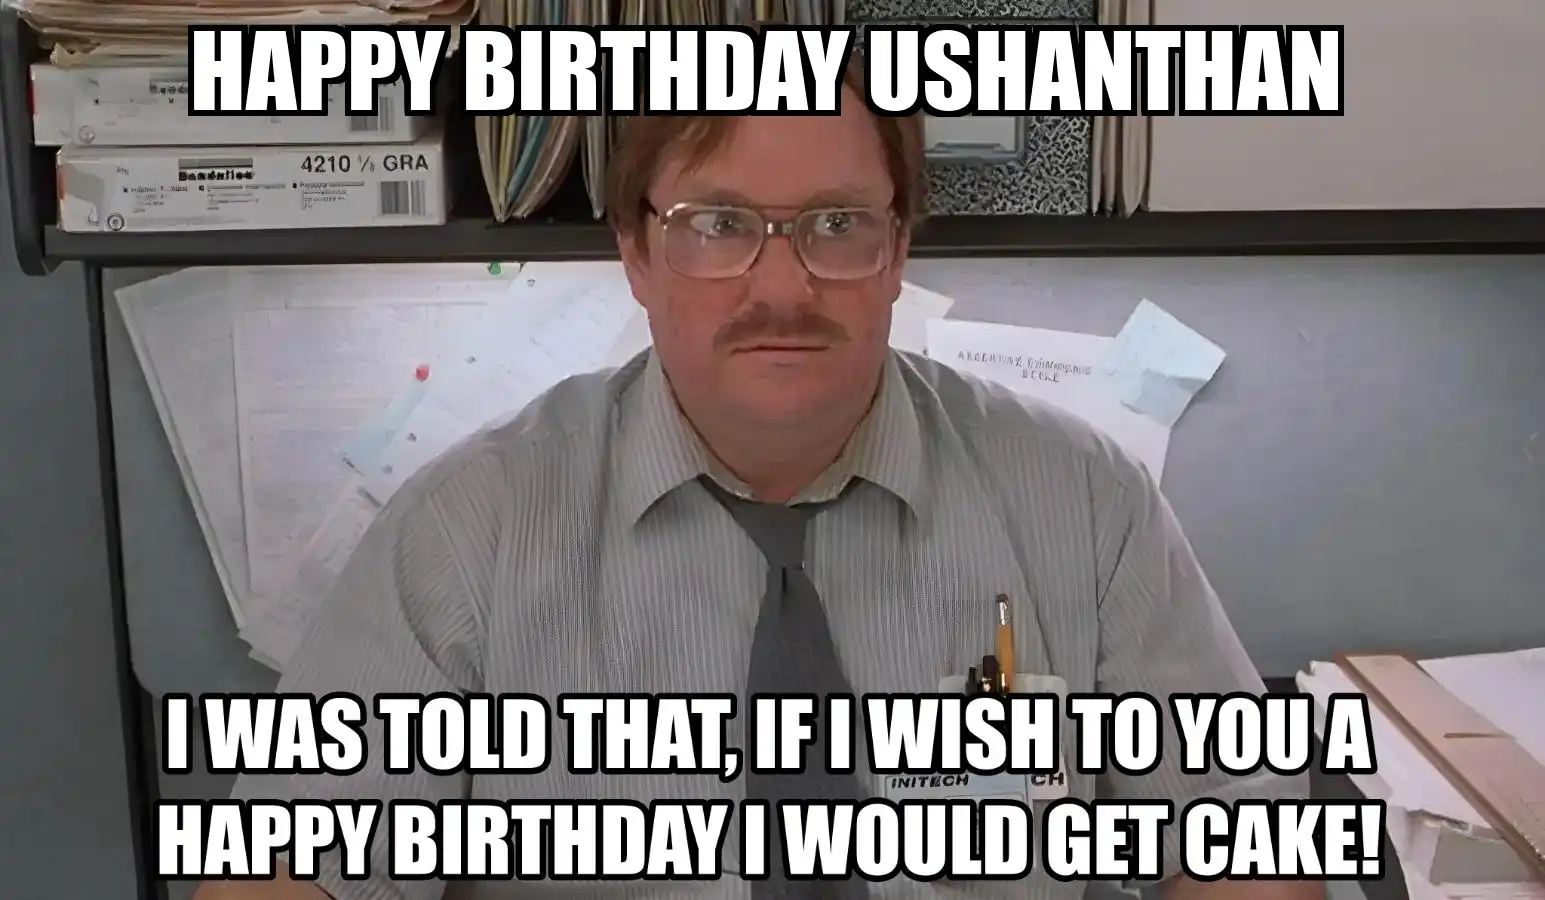 Happy Birthday Ushanthan I Would Get A Cake Meme